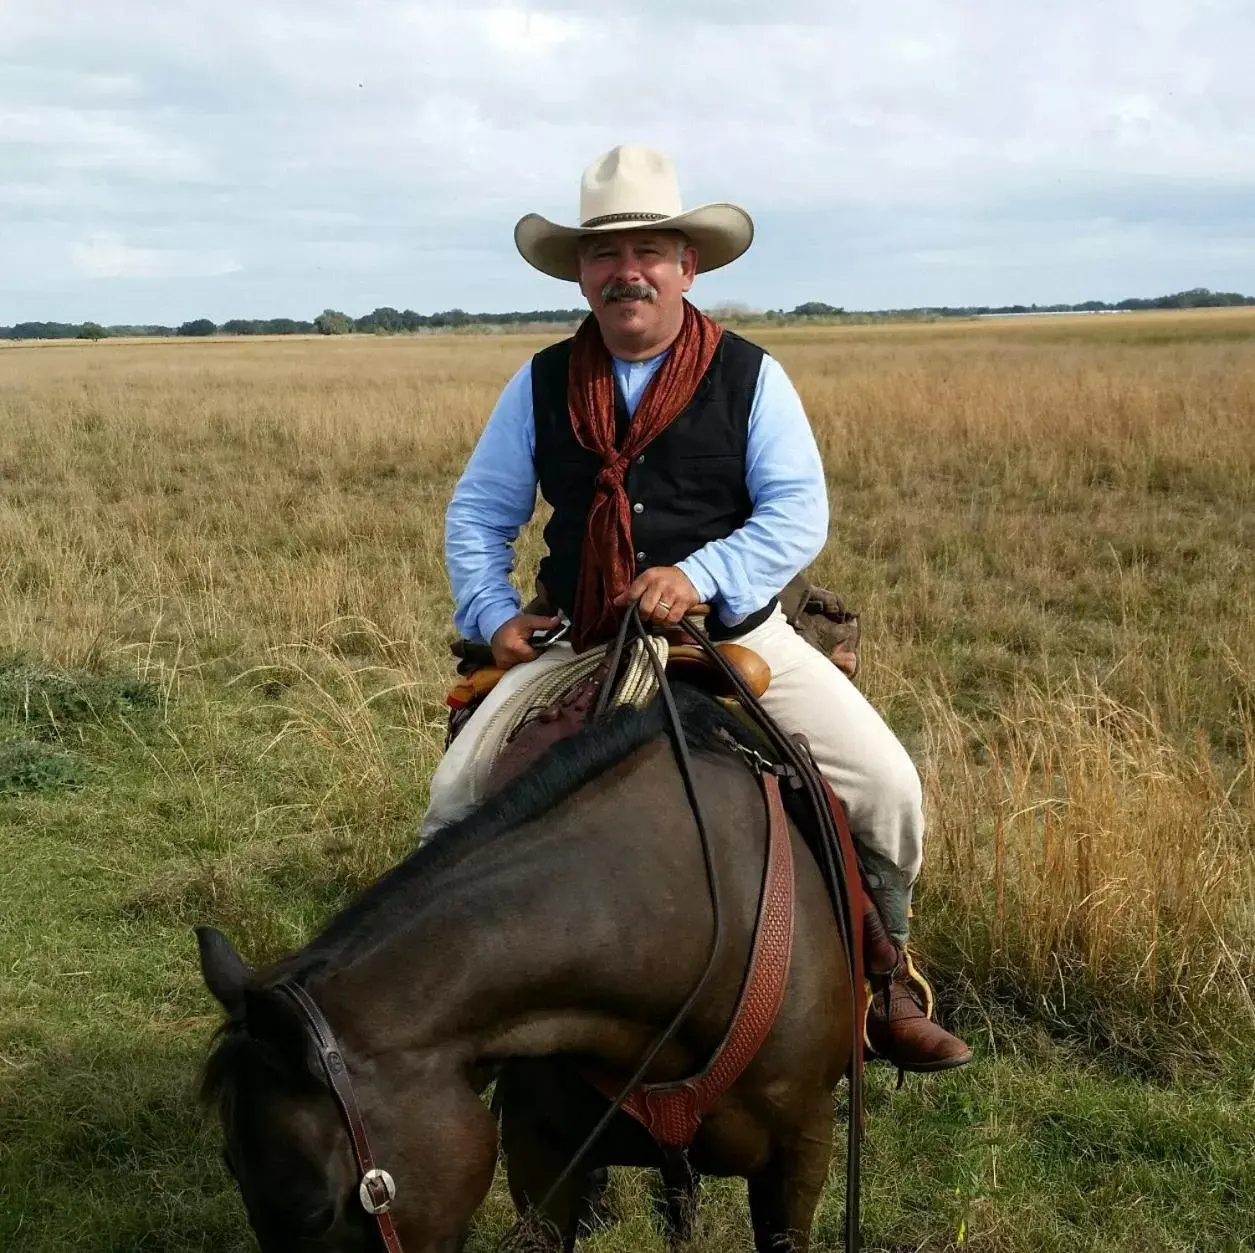 Off site, Horseback Riding in Seminole Inn